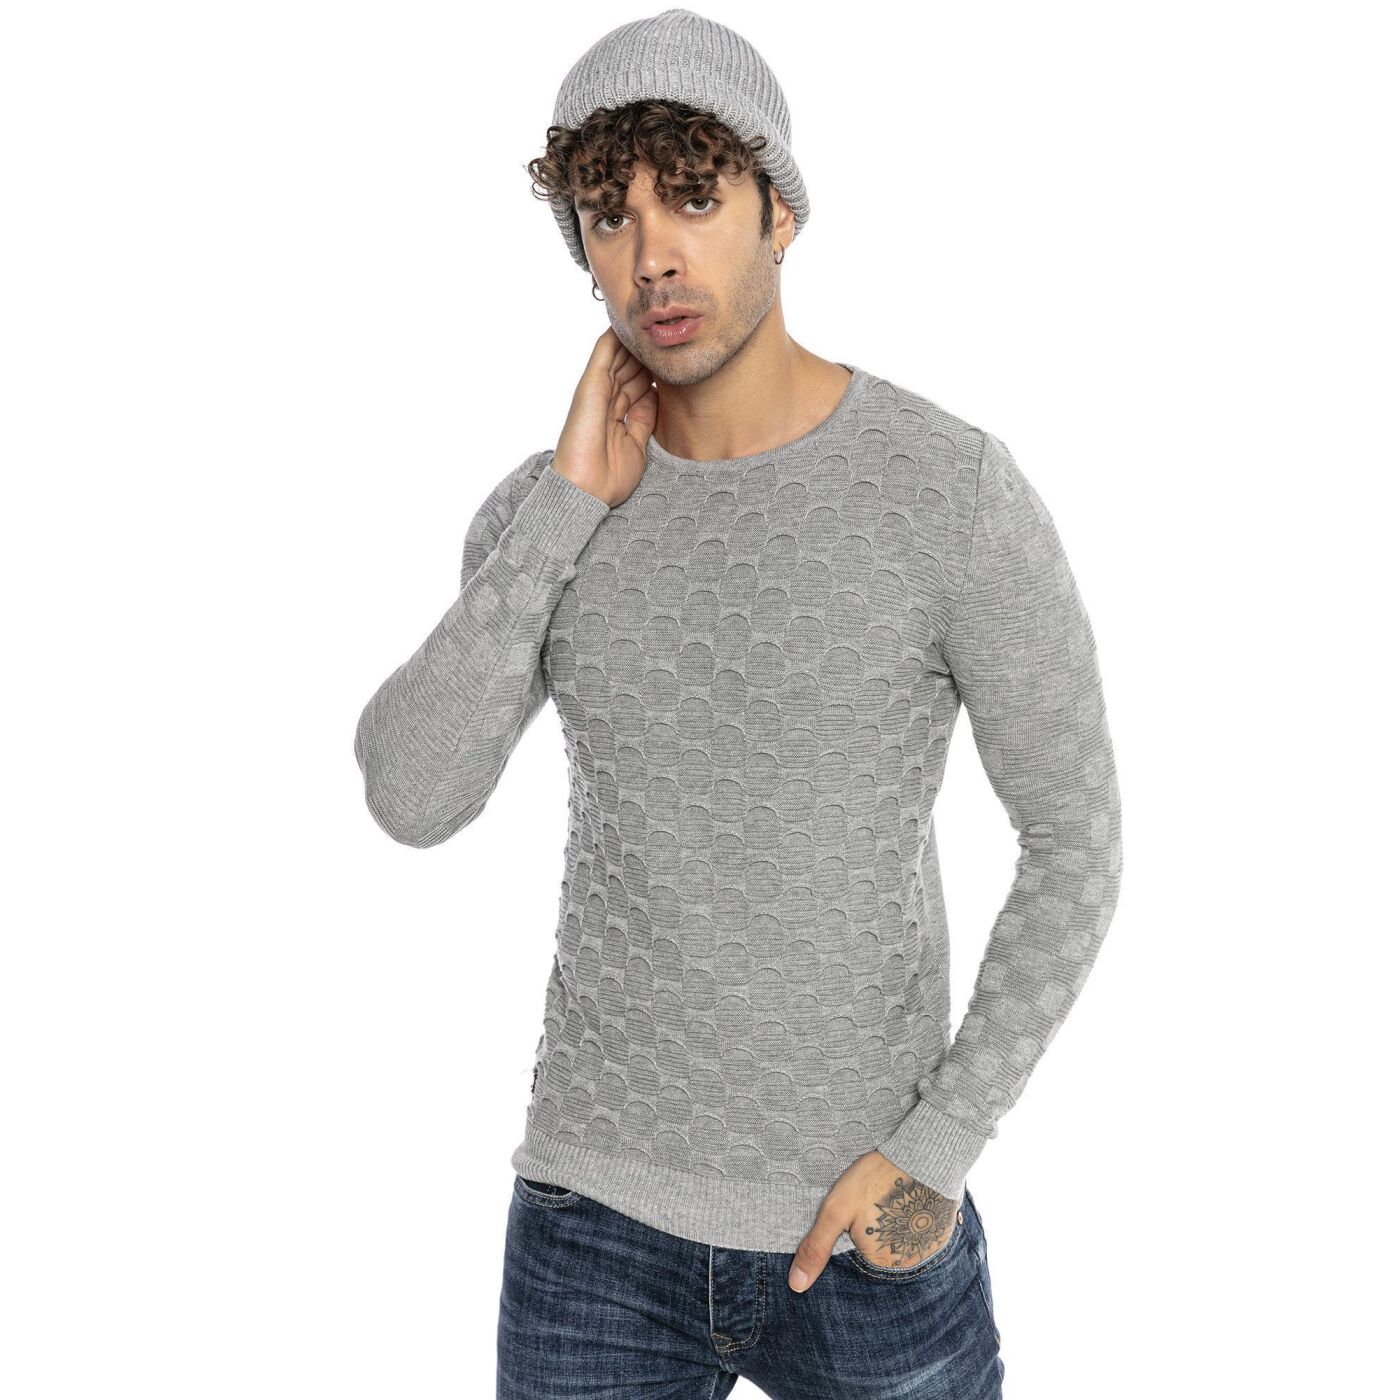 https://redbridgejeans.de/media/image/product/68812/lg/m3111_red-bridge-mens-knitted-sweater-sweatshirt-structured-m3111_15.jpg